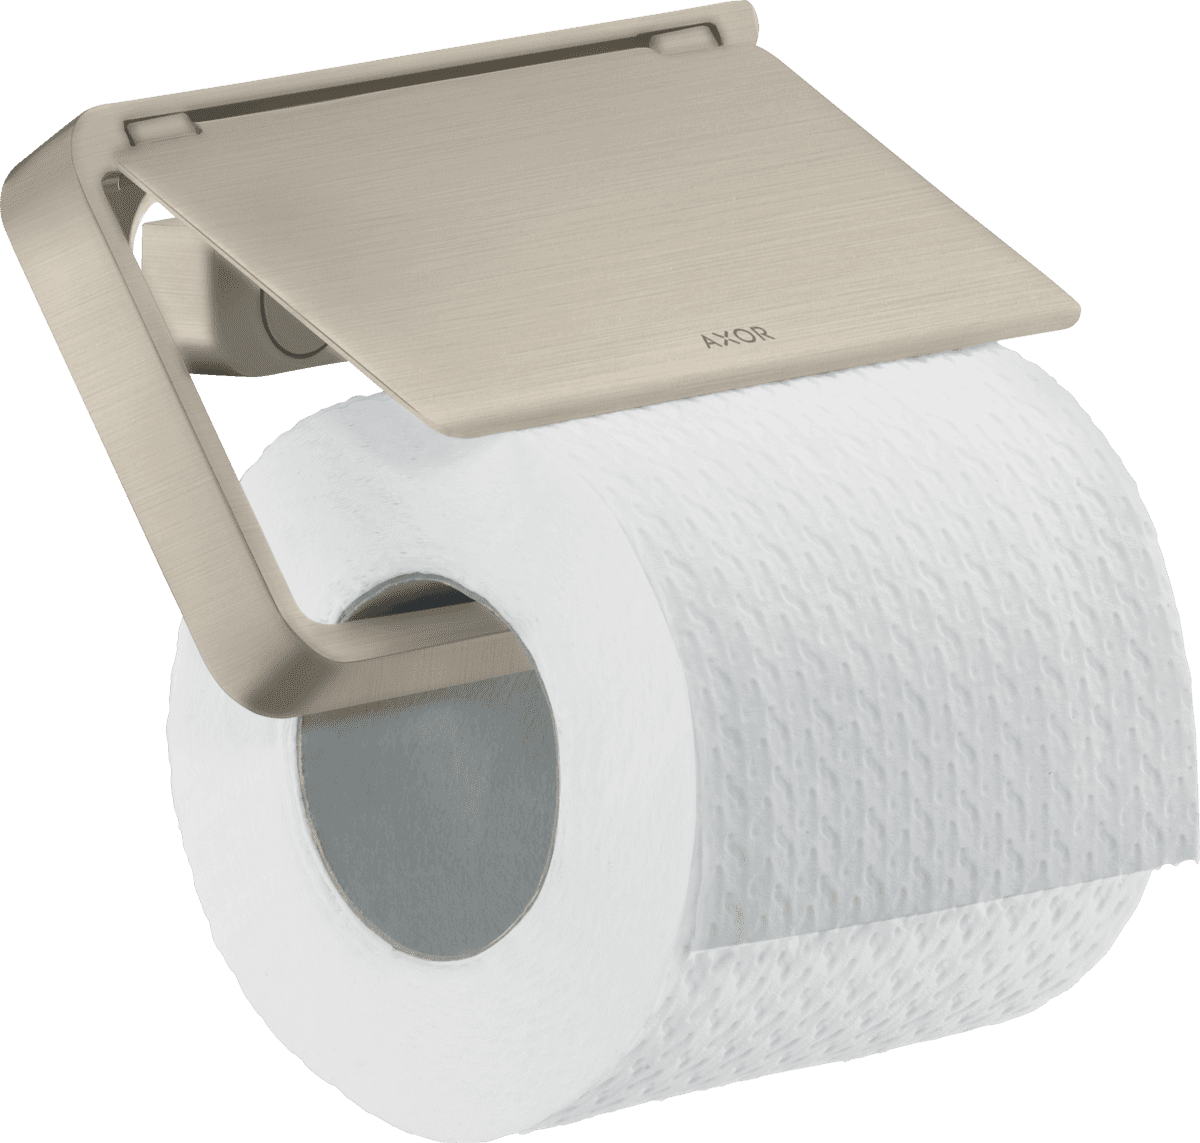 HANSGROHE AXOR Universal Softsquare Tuvalet kağıtlığı kapaklı #42836820 - Mat Nikel resmi